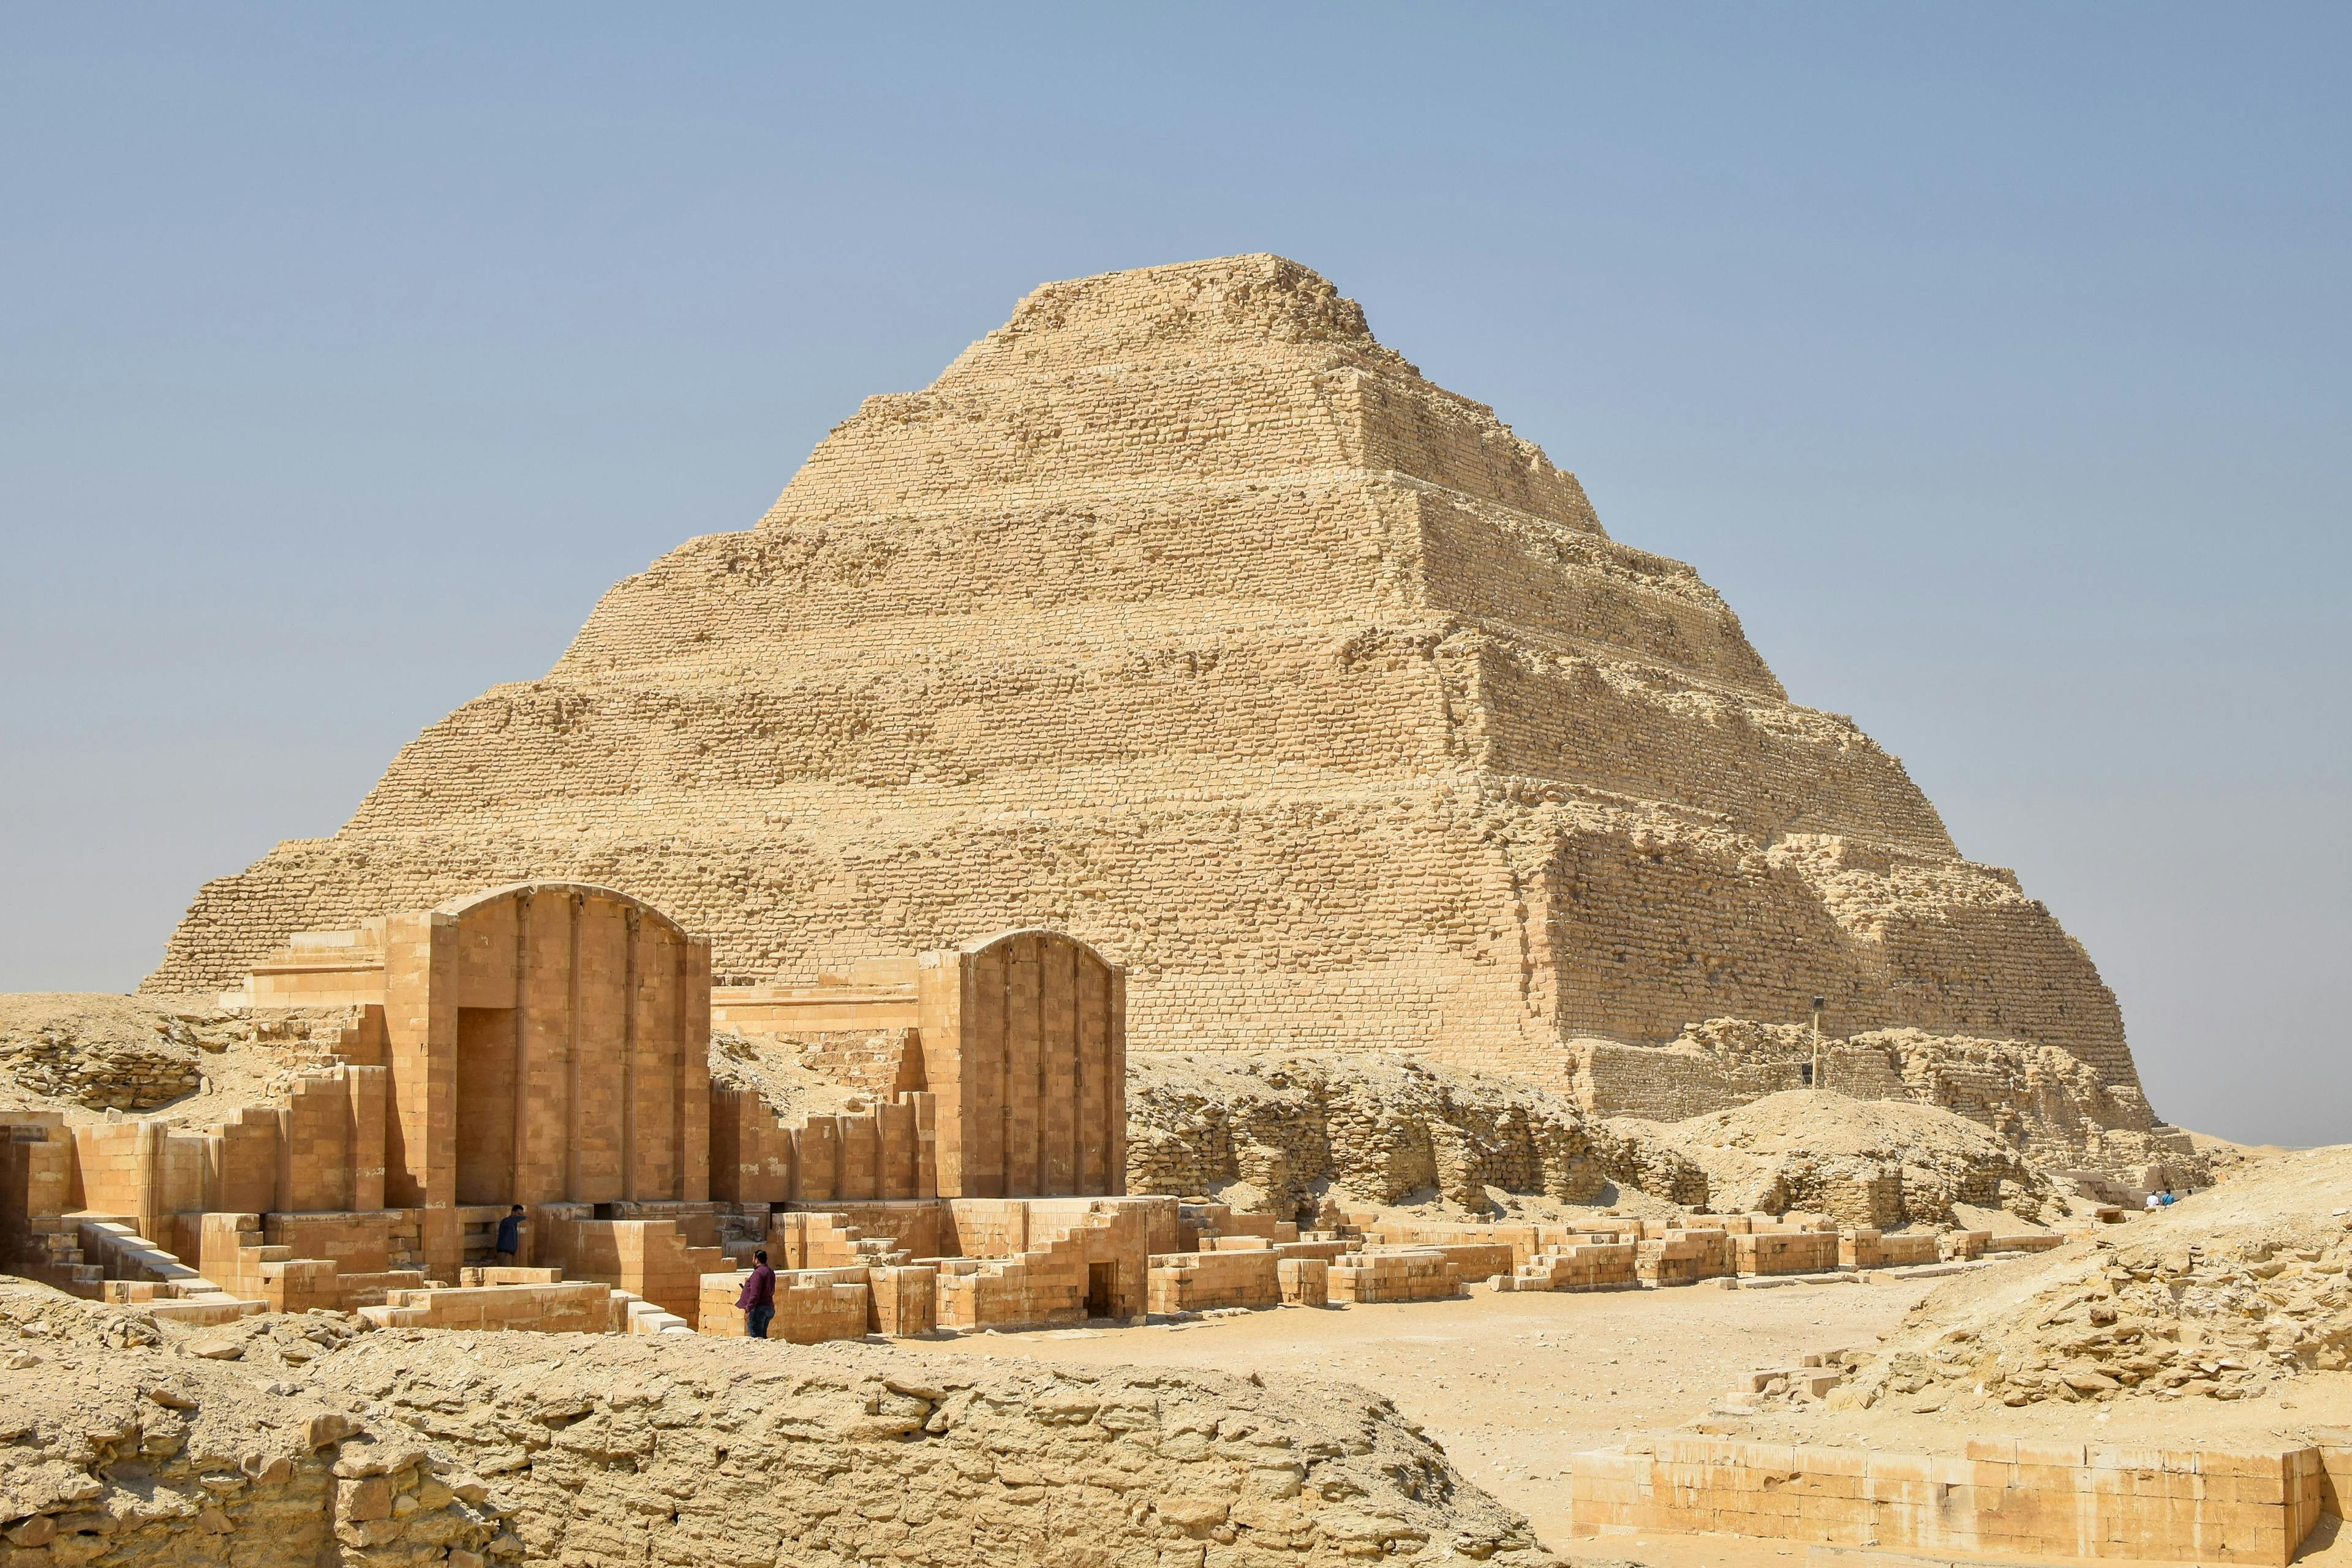 Djoser's pyramid on Saqqara, Egypt, on a sunny day. | Image Credit: © Syaifur Rohman - stock.adobe.com